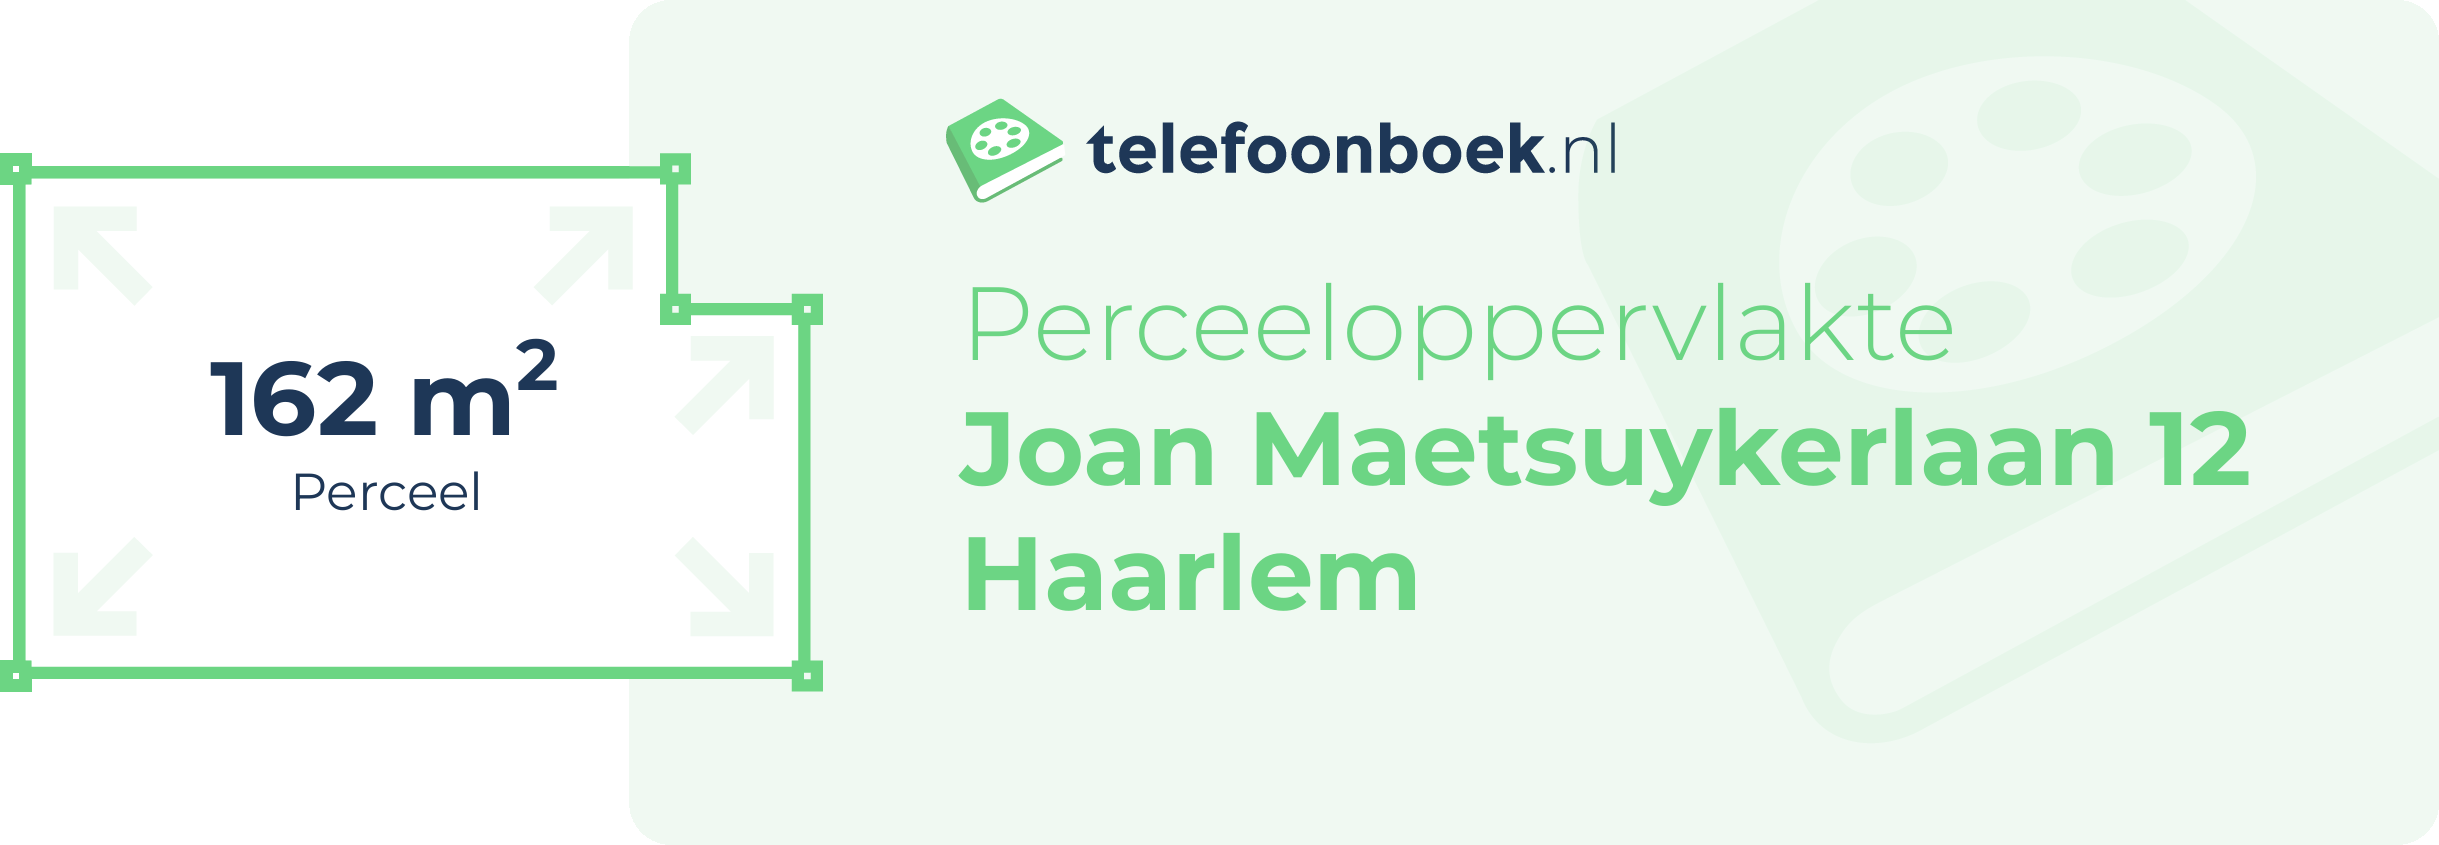 Perceeloppervlakte Joan Maetsuykerlaan 12 Haarlem